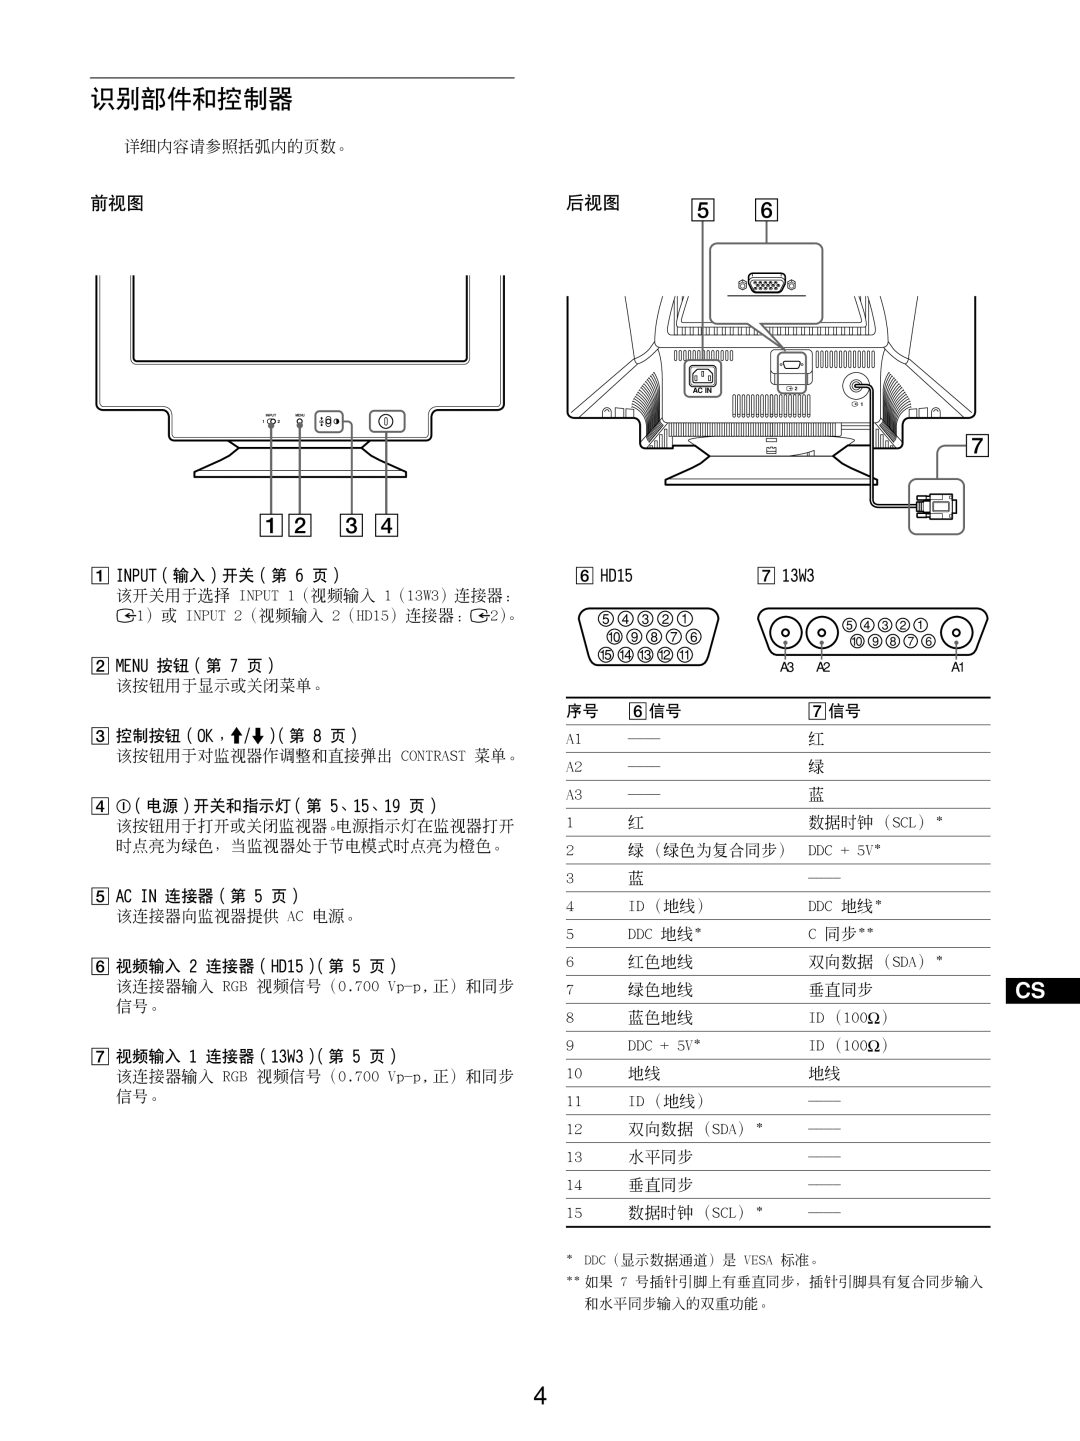 Sony GDM-5510 operating instructions 识别部件和控制器, 12 3, 后视图 5 